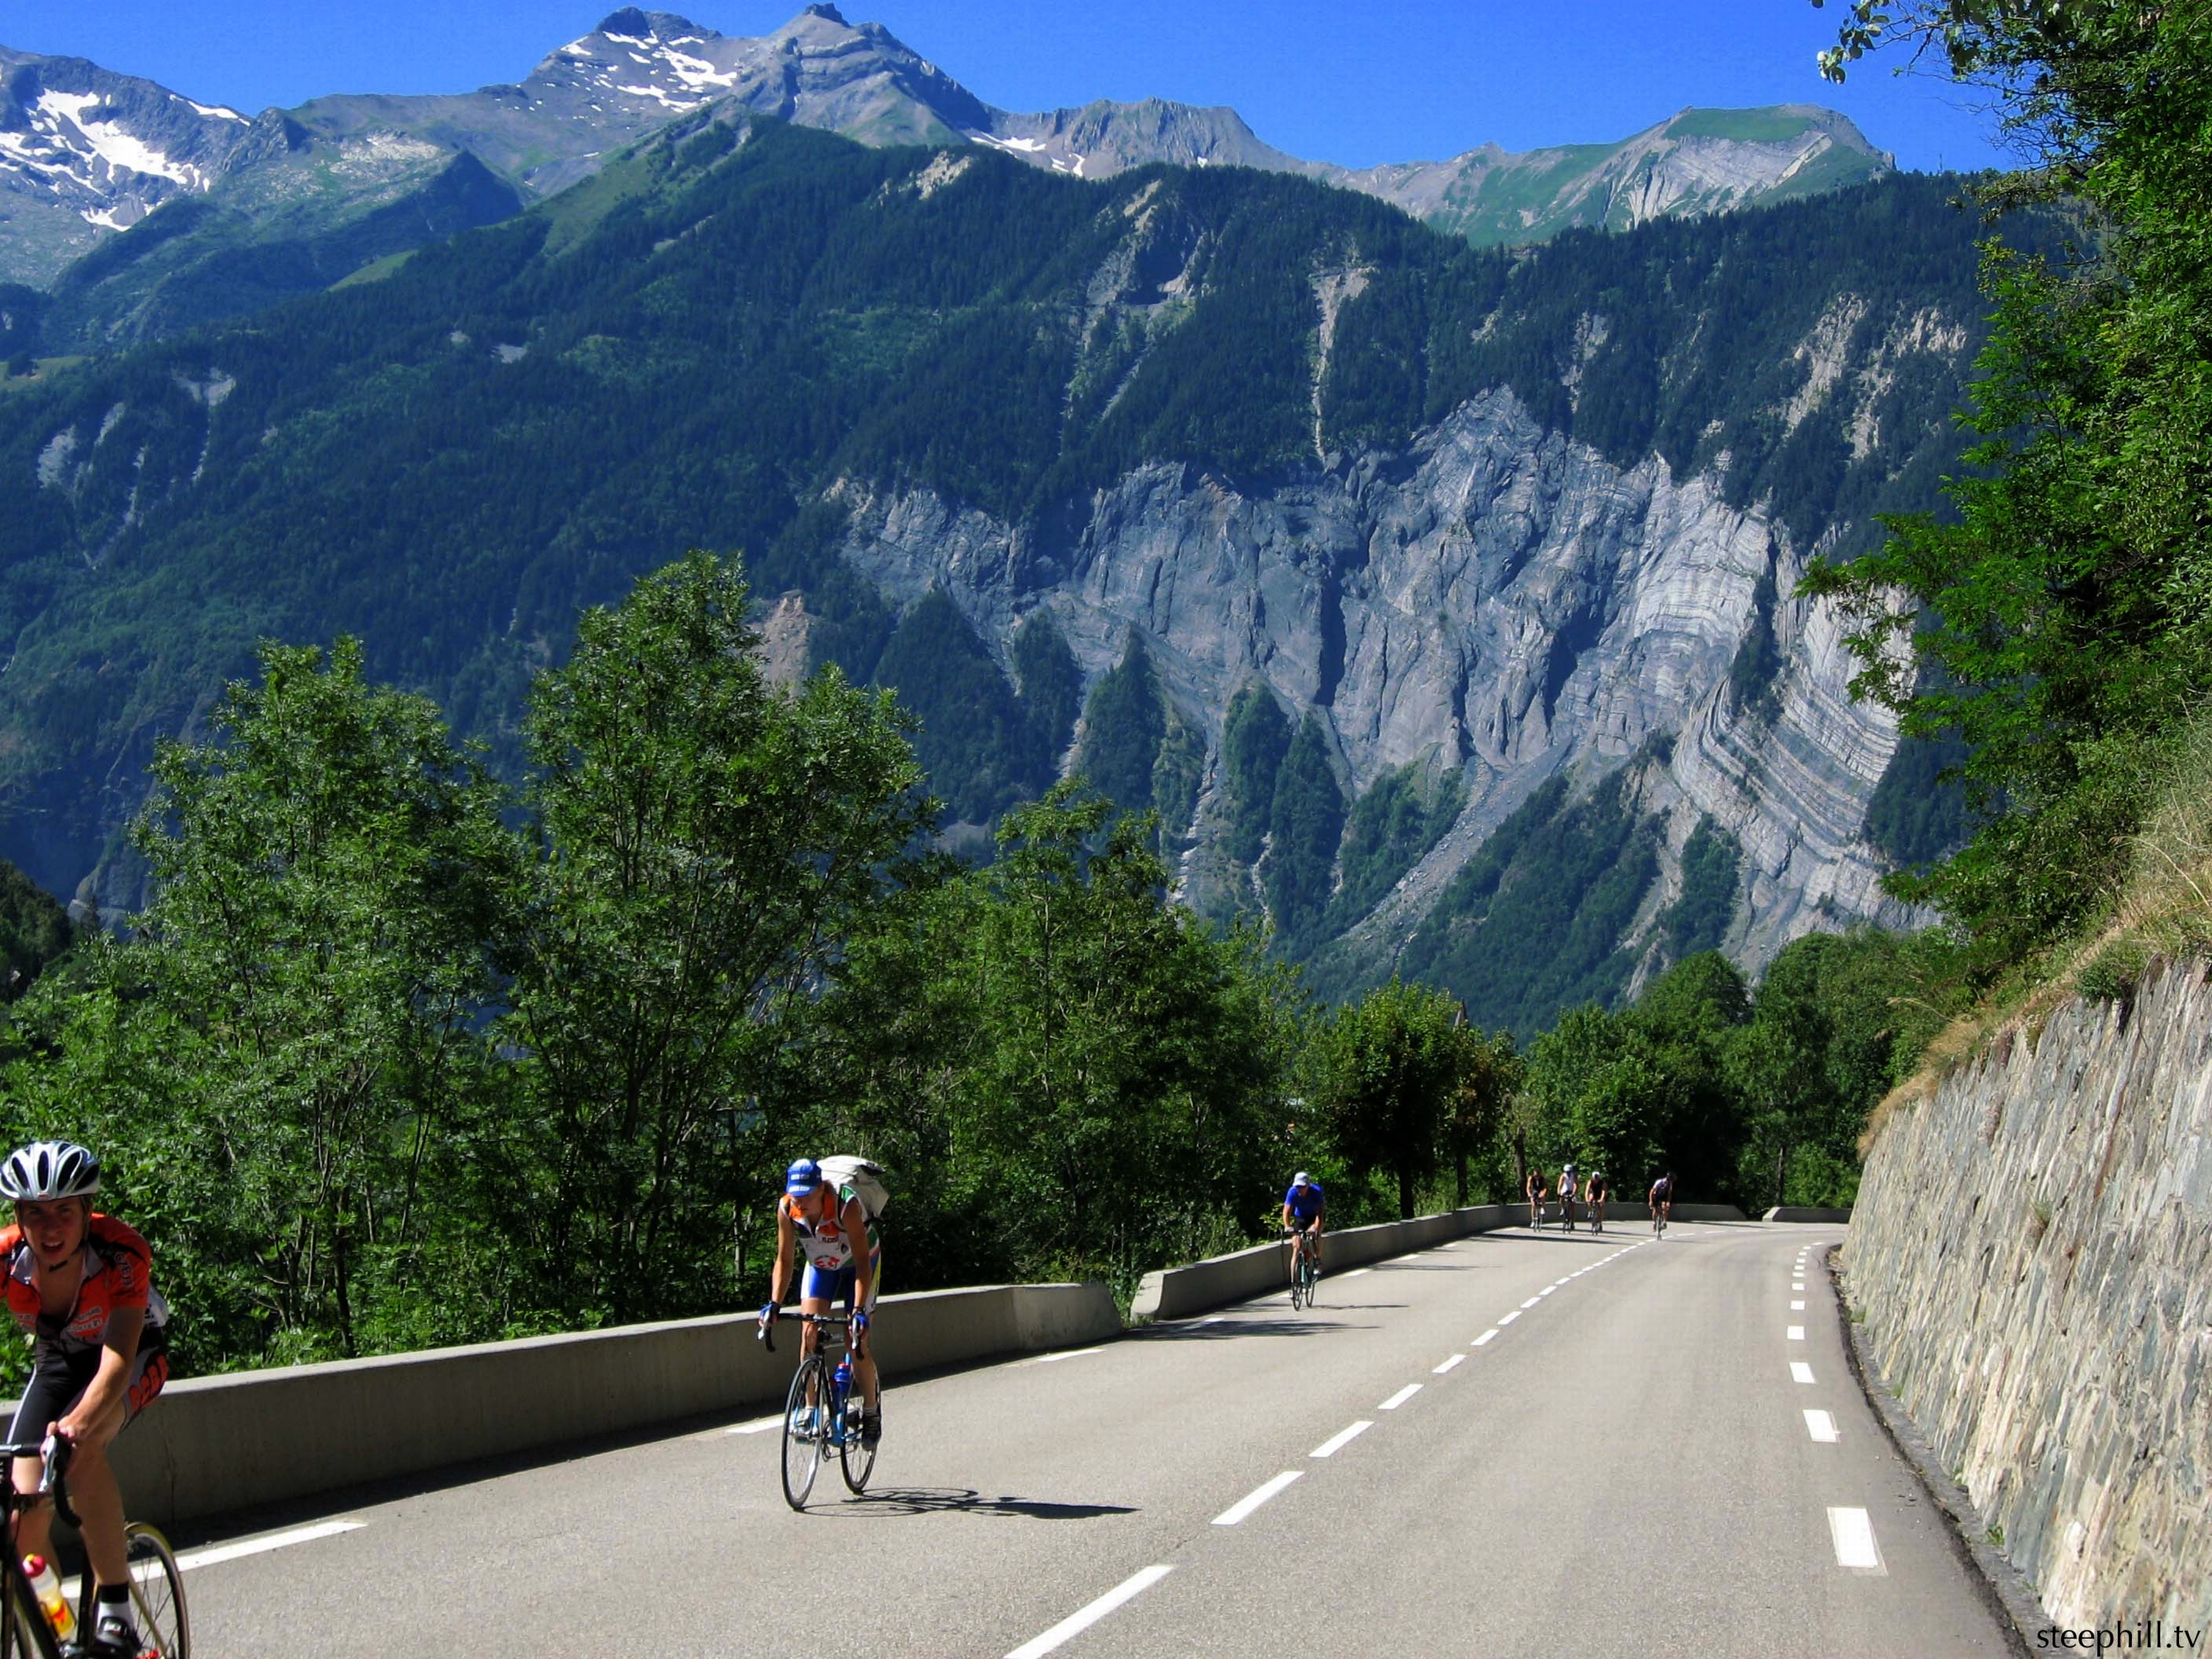 Bike tour. Tour de France Alpe d,Huez. Велотур Альпы. Альп д'Юэз велотрасса. Тур де Франс велосипеды.